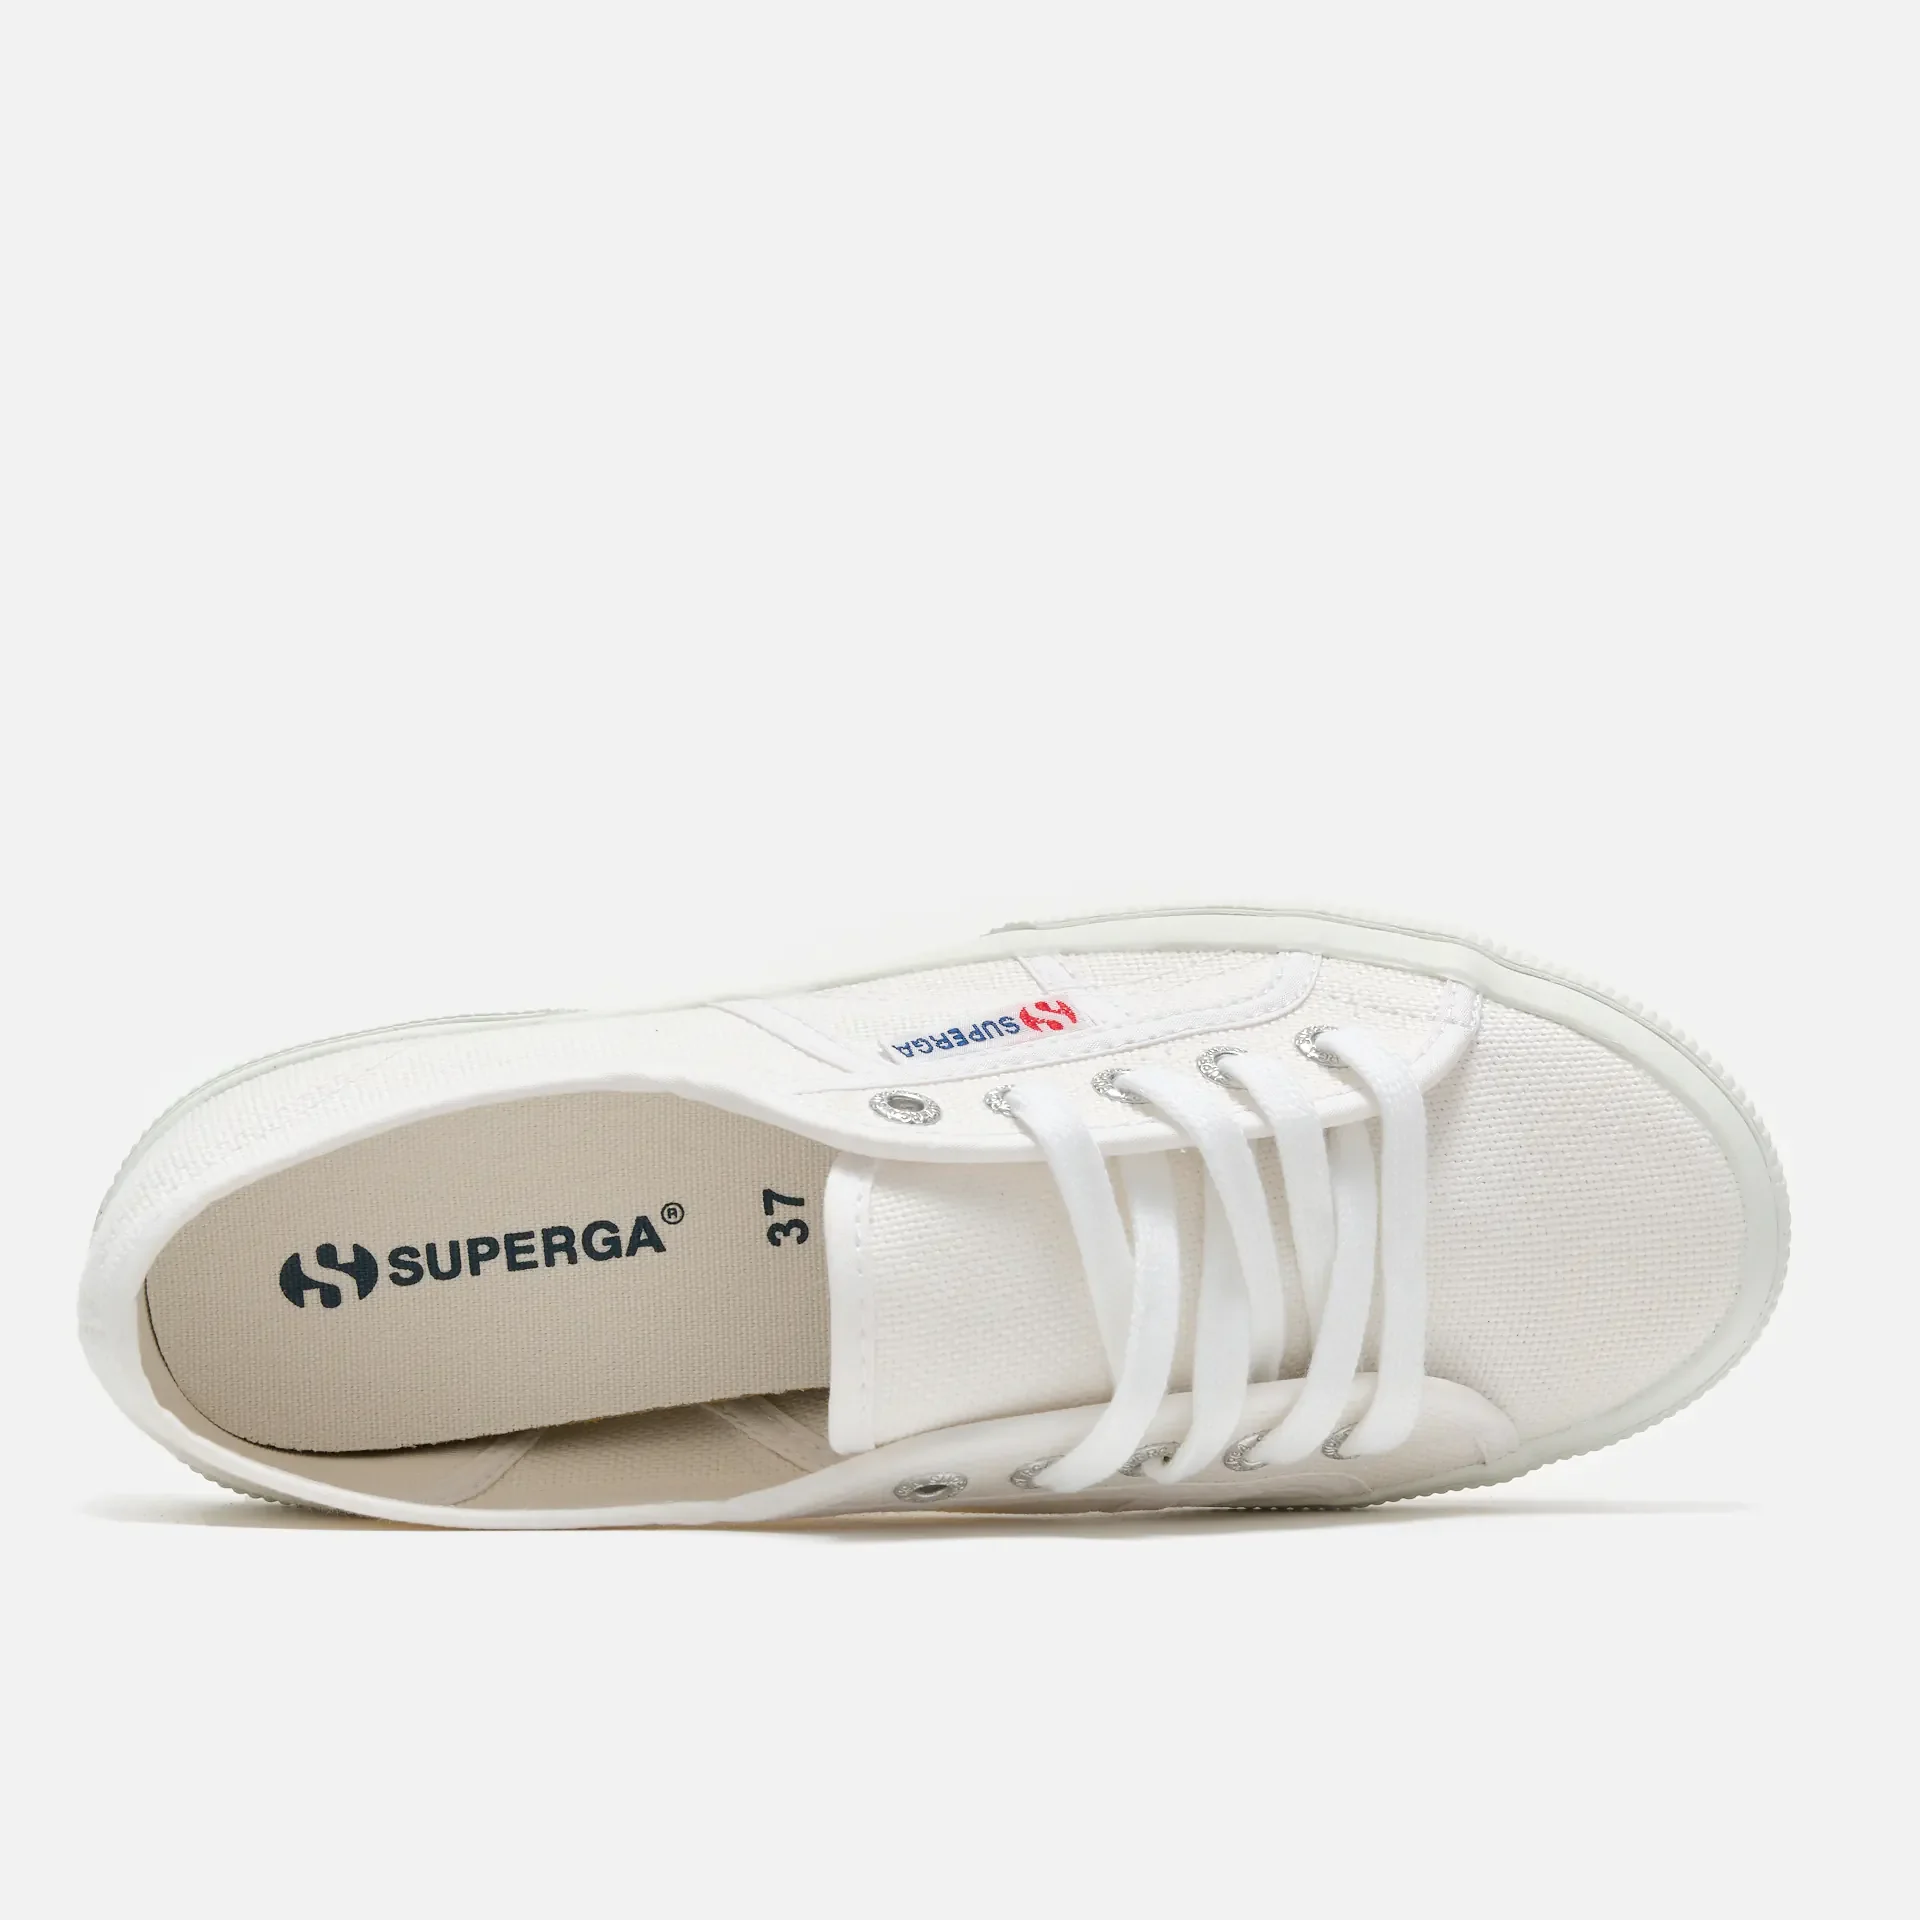 Superga 2750 Cotu Classic Sneaker White